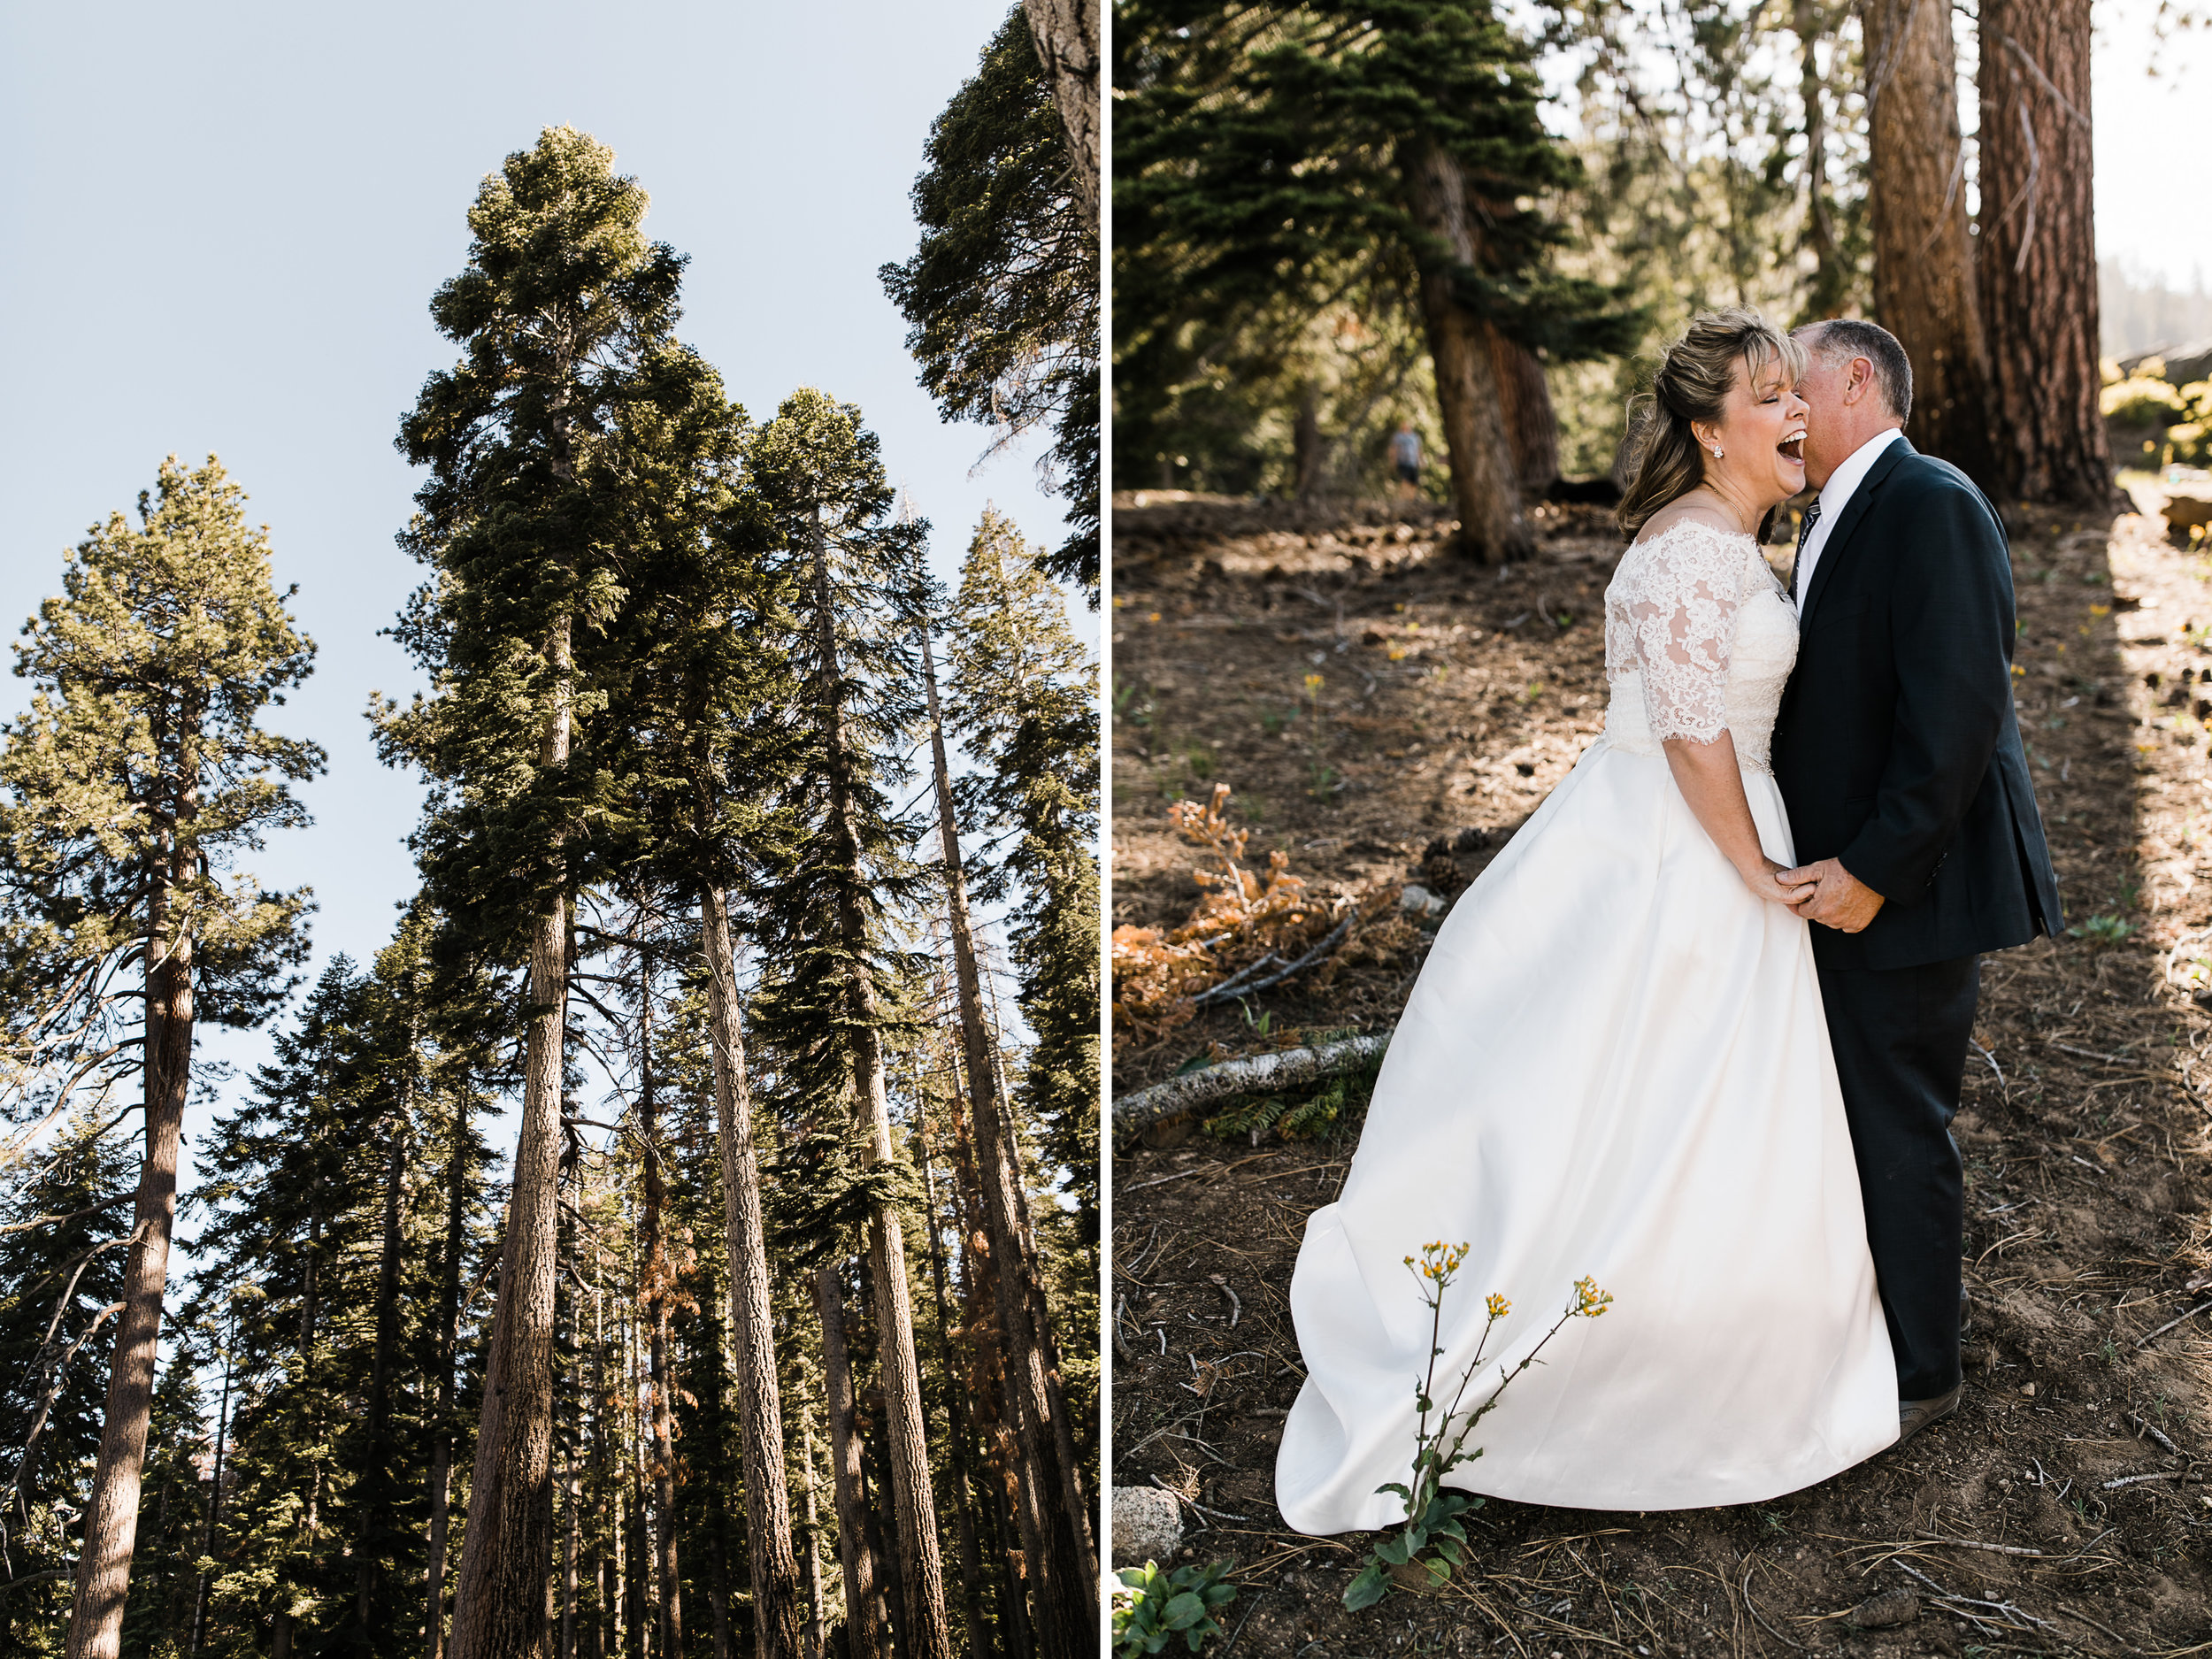 kit + brad's elopement in yosemite | adventure wedding at taft point | national park elopement photographer | the hearnes adventure photography | yosemite elopement photographers